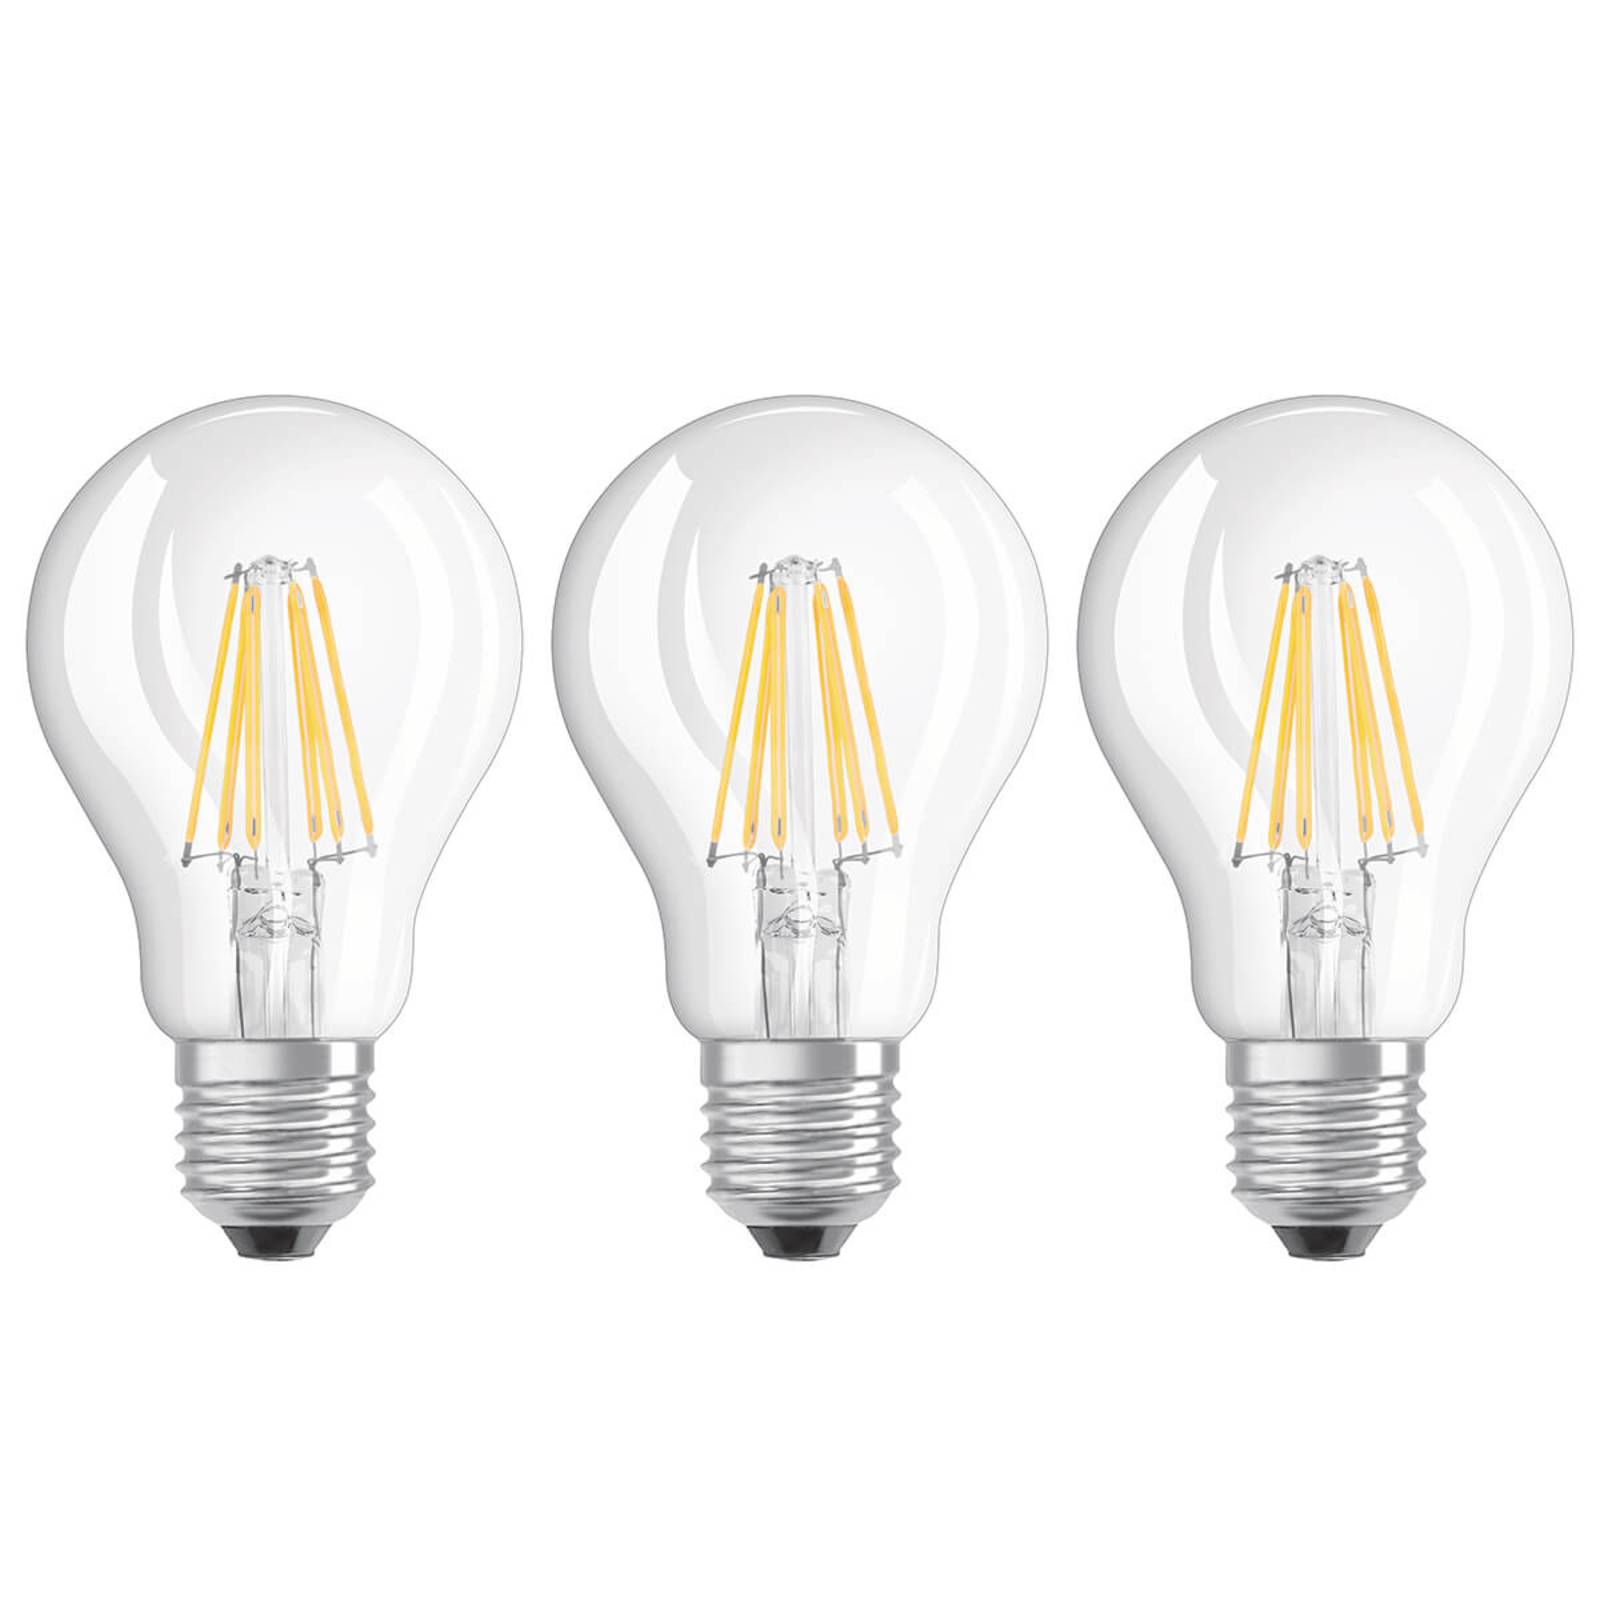 Osram LED-Filamentlampe E27 6W, warmweiß, 3er-Set